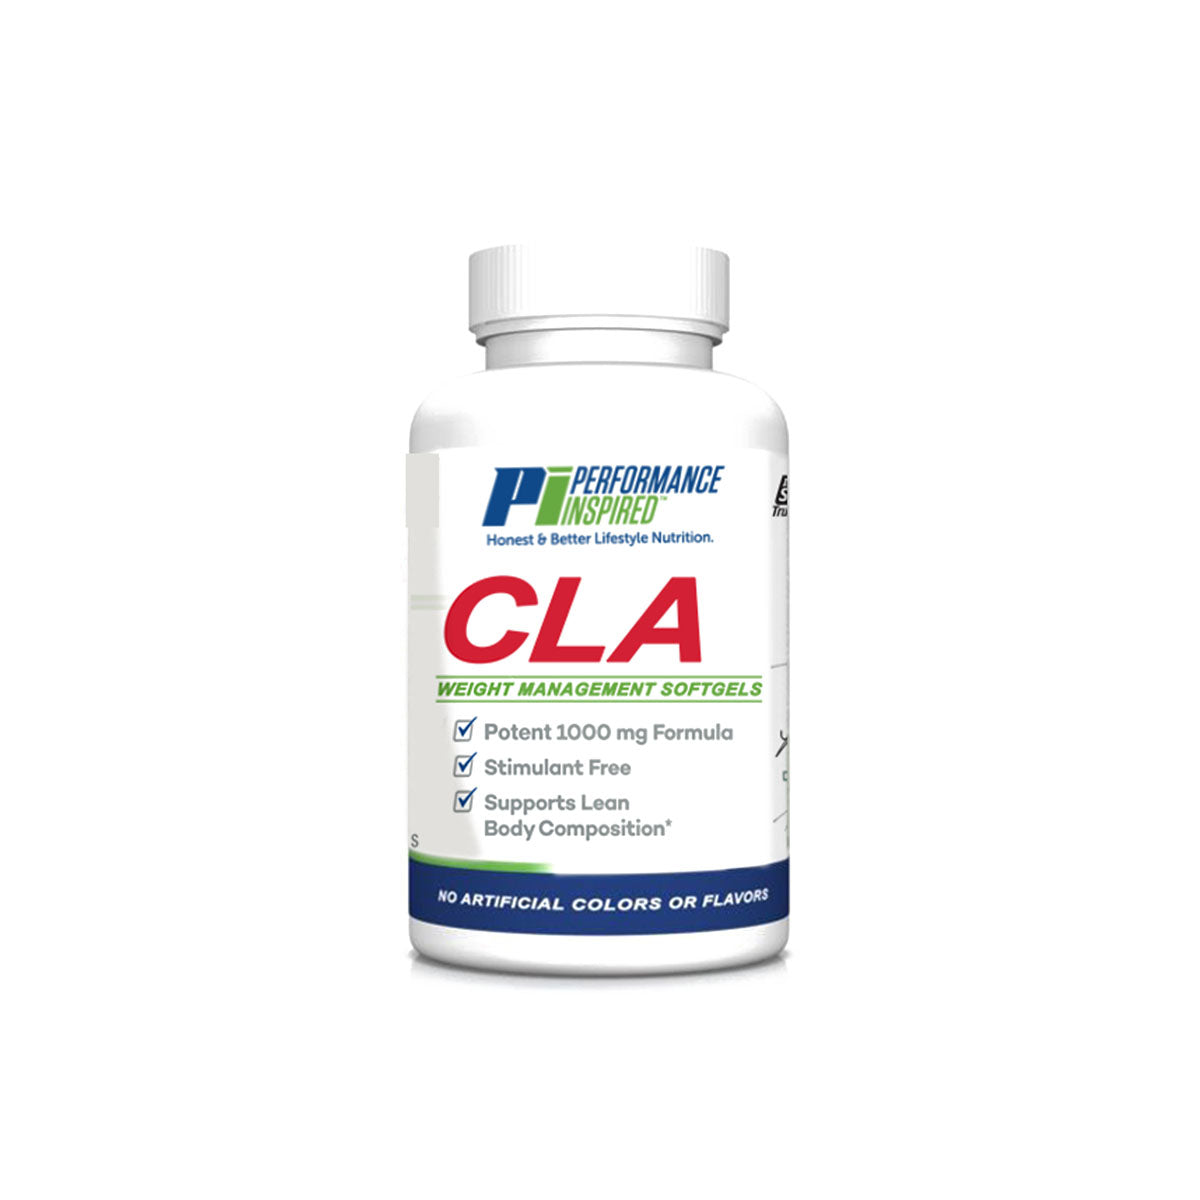 CLA - Weight Management Softgels